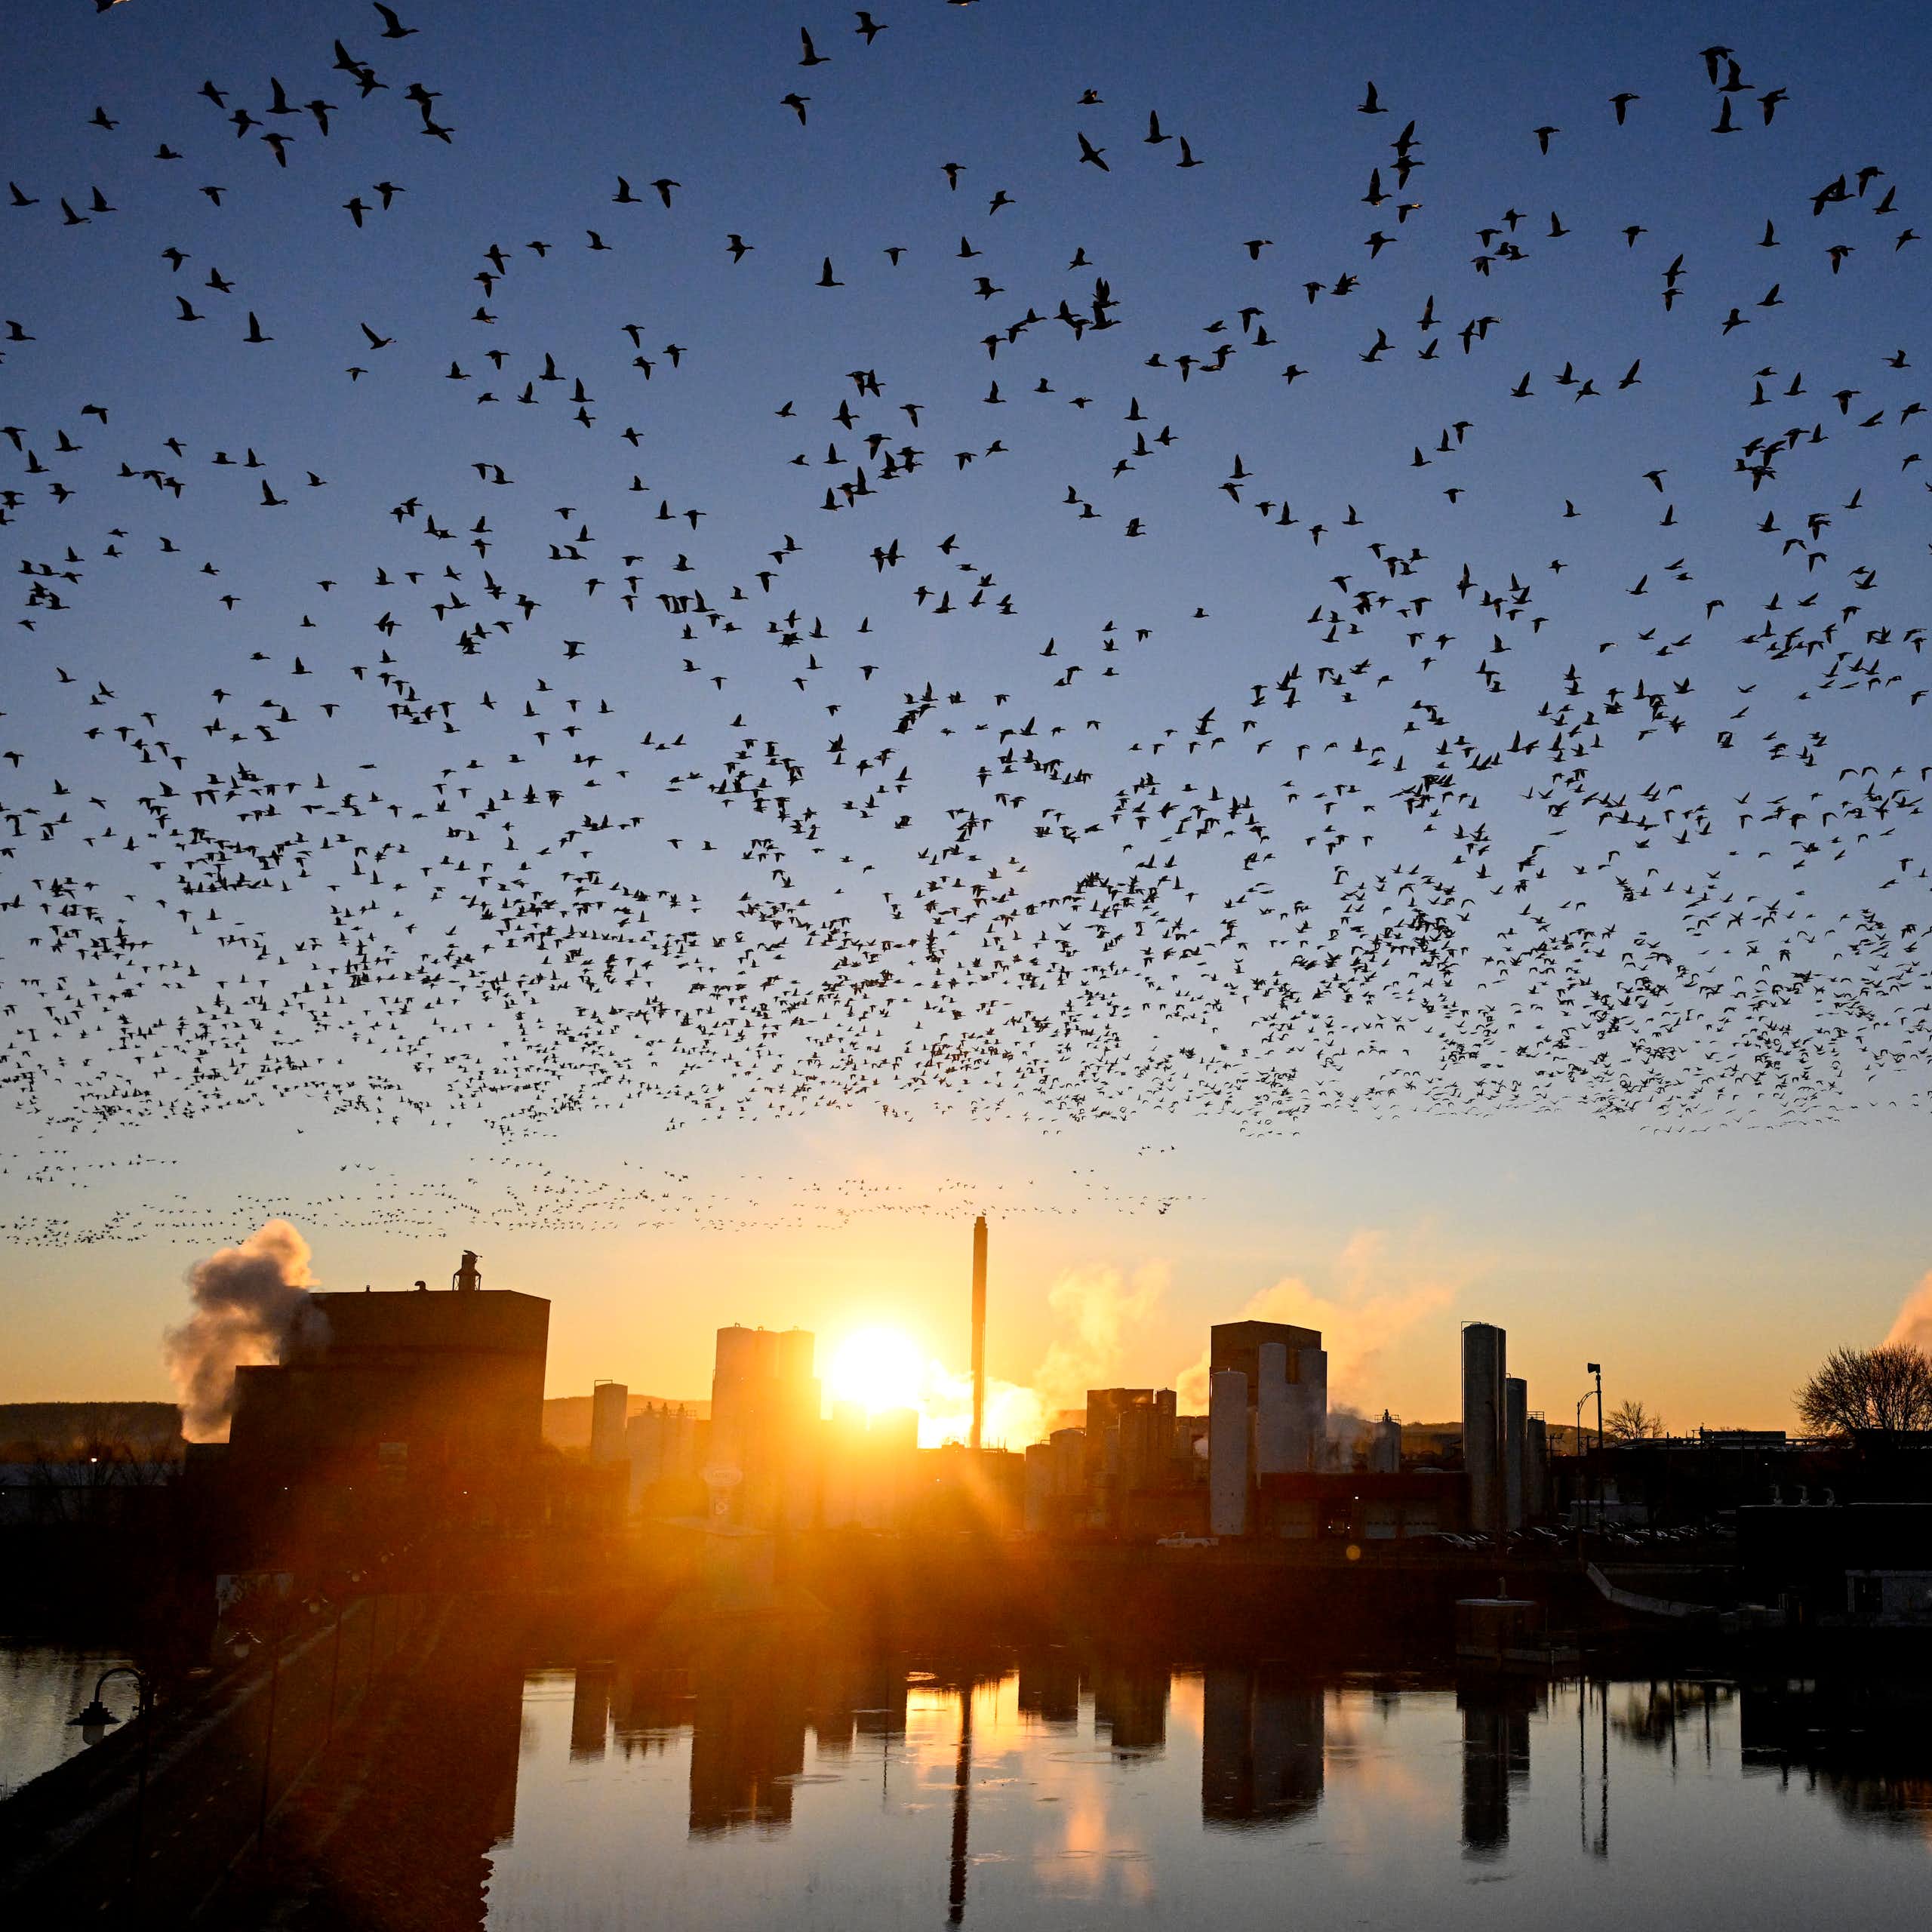 A flock of birds fly through the air against a rising sun.